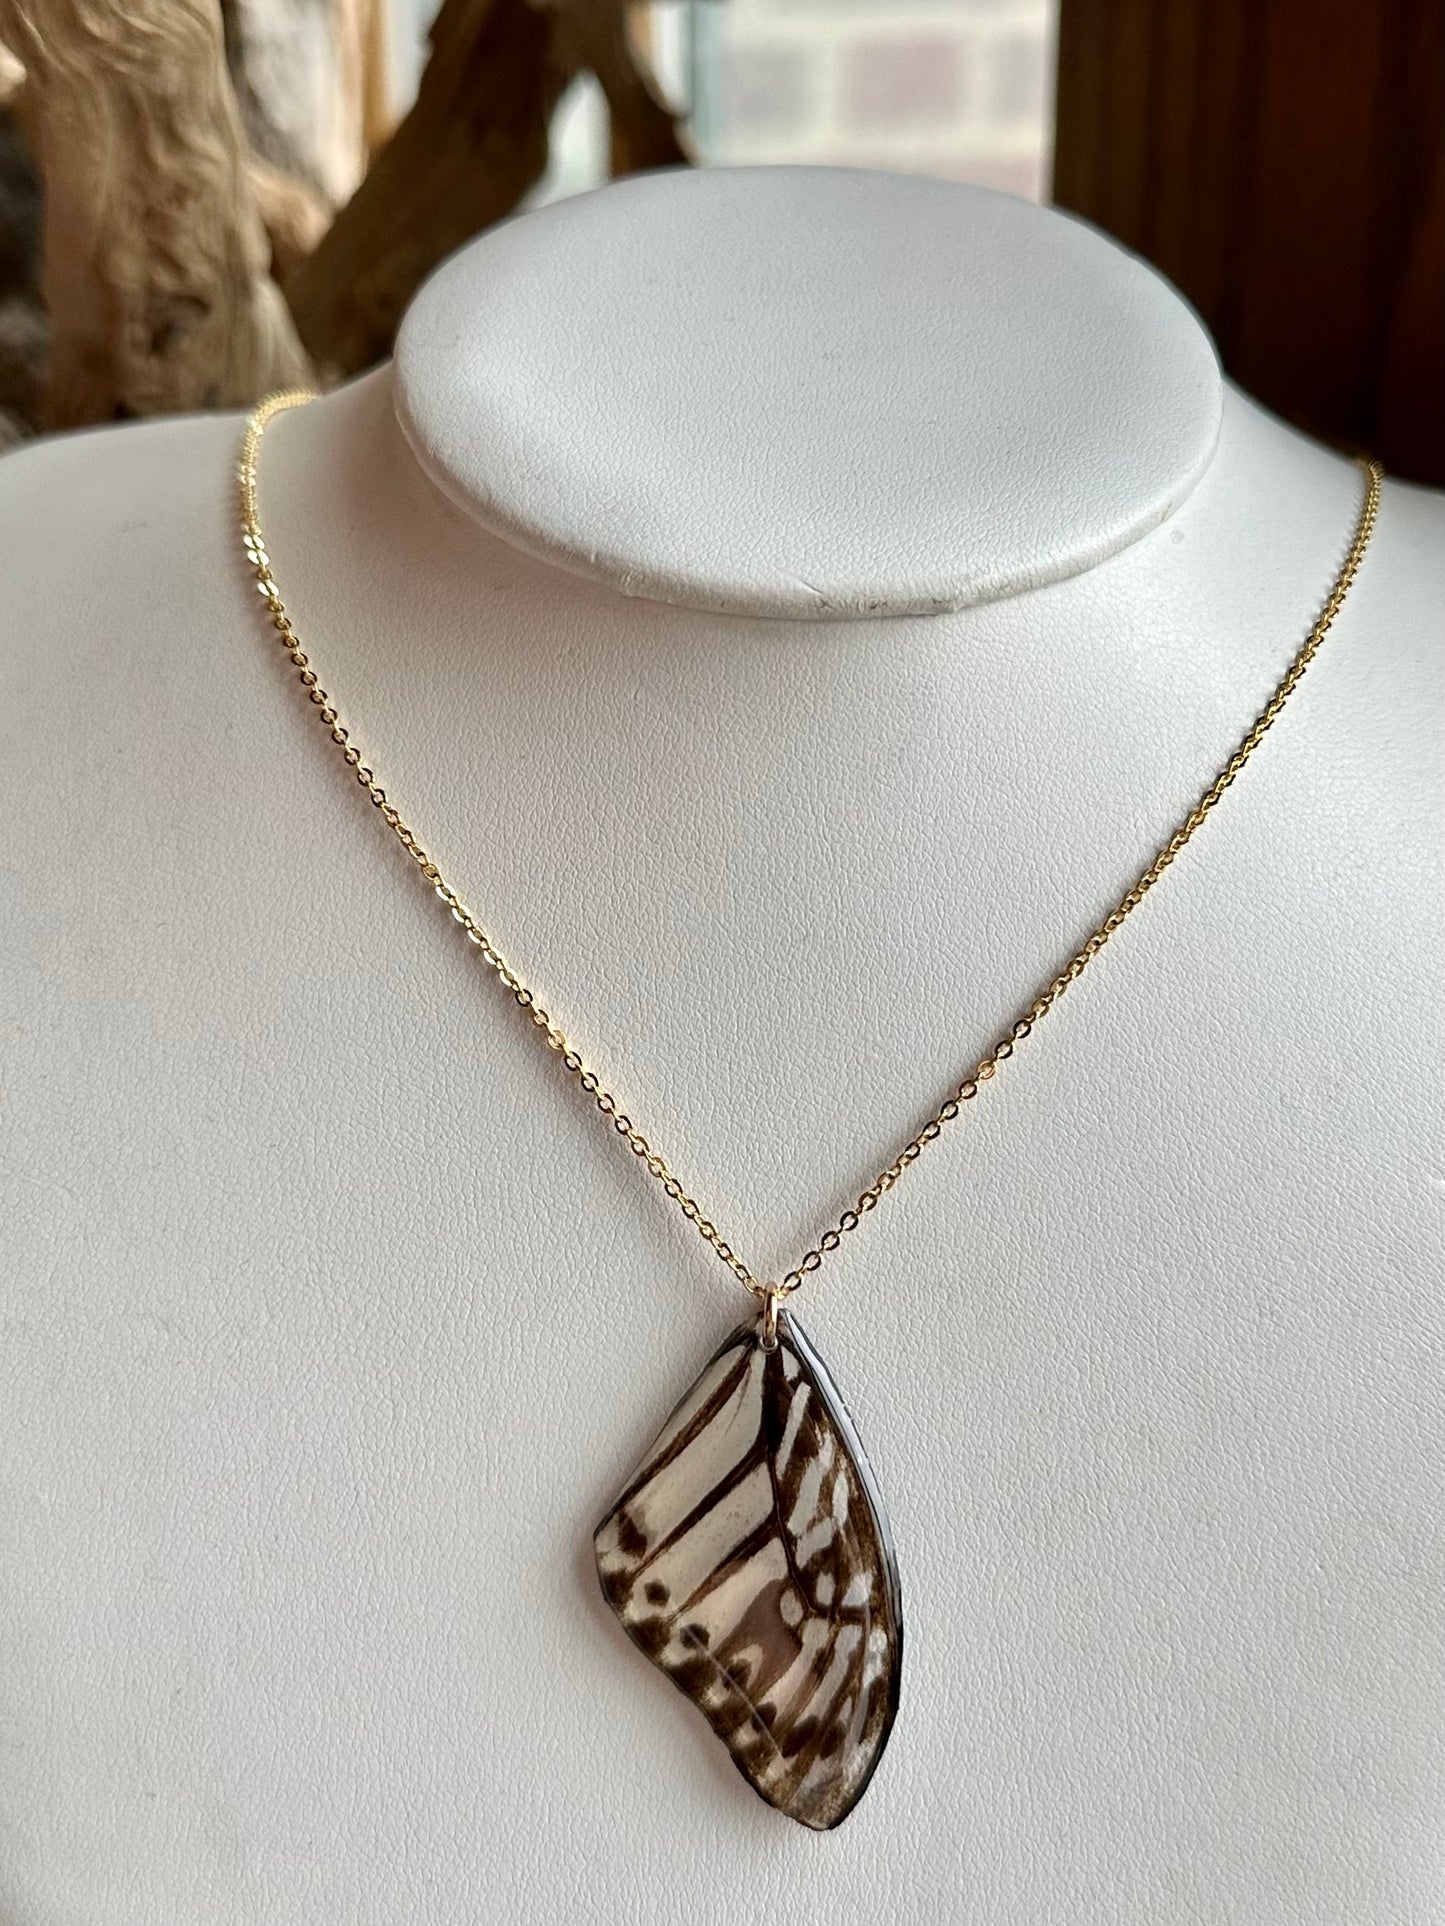 Real Malayan Zebra Butterfly Necklace